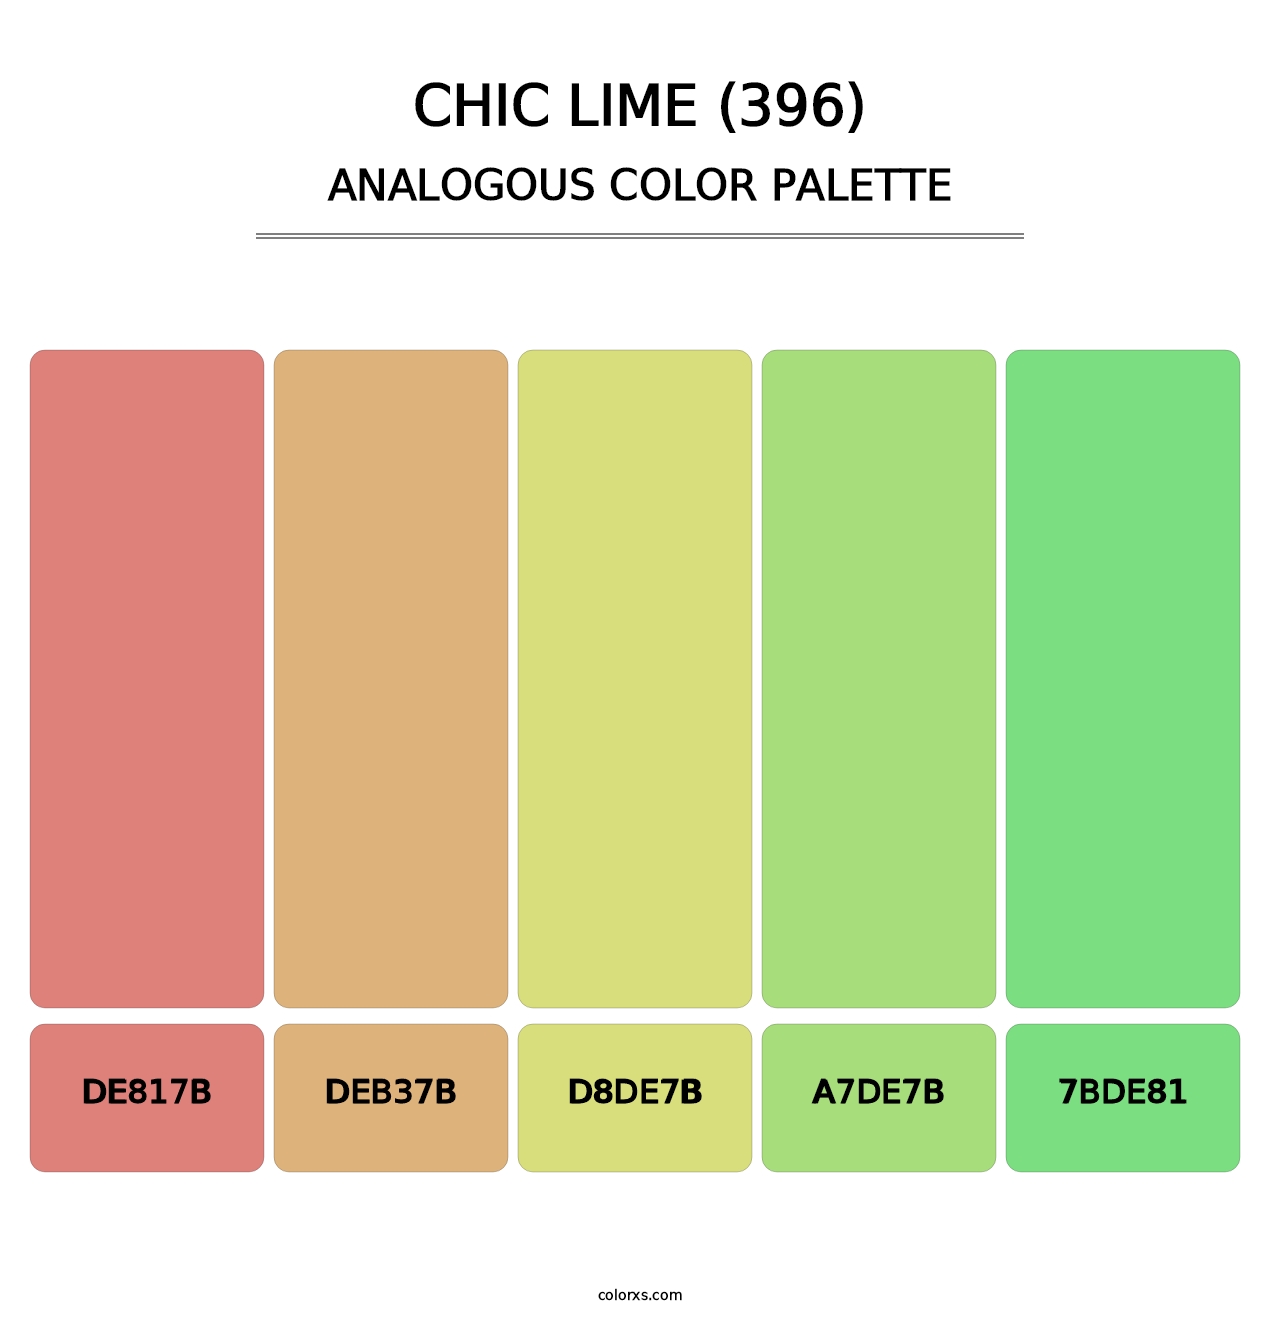 Chic Lime (396) - Analogous Color Palette